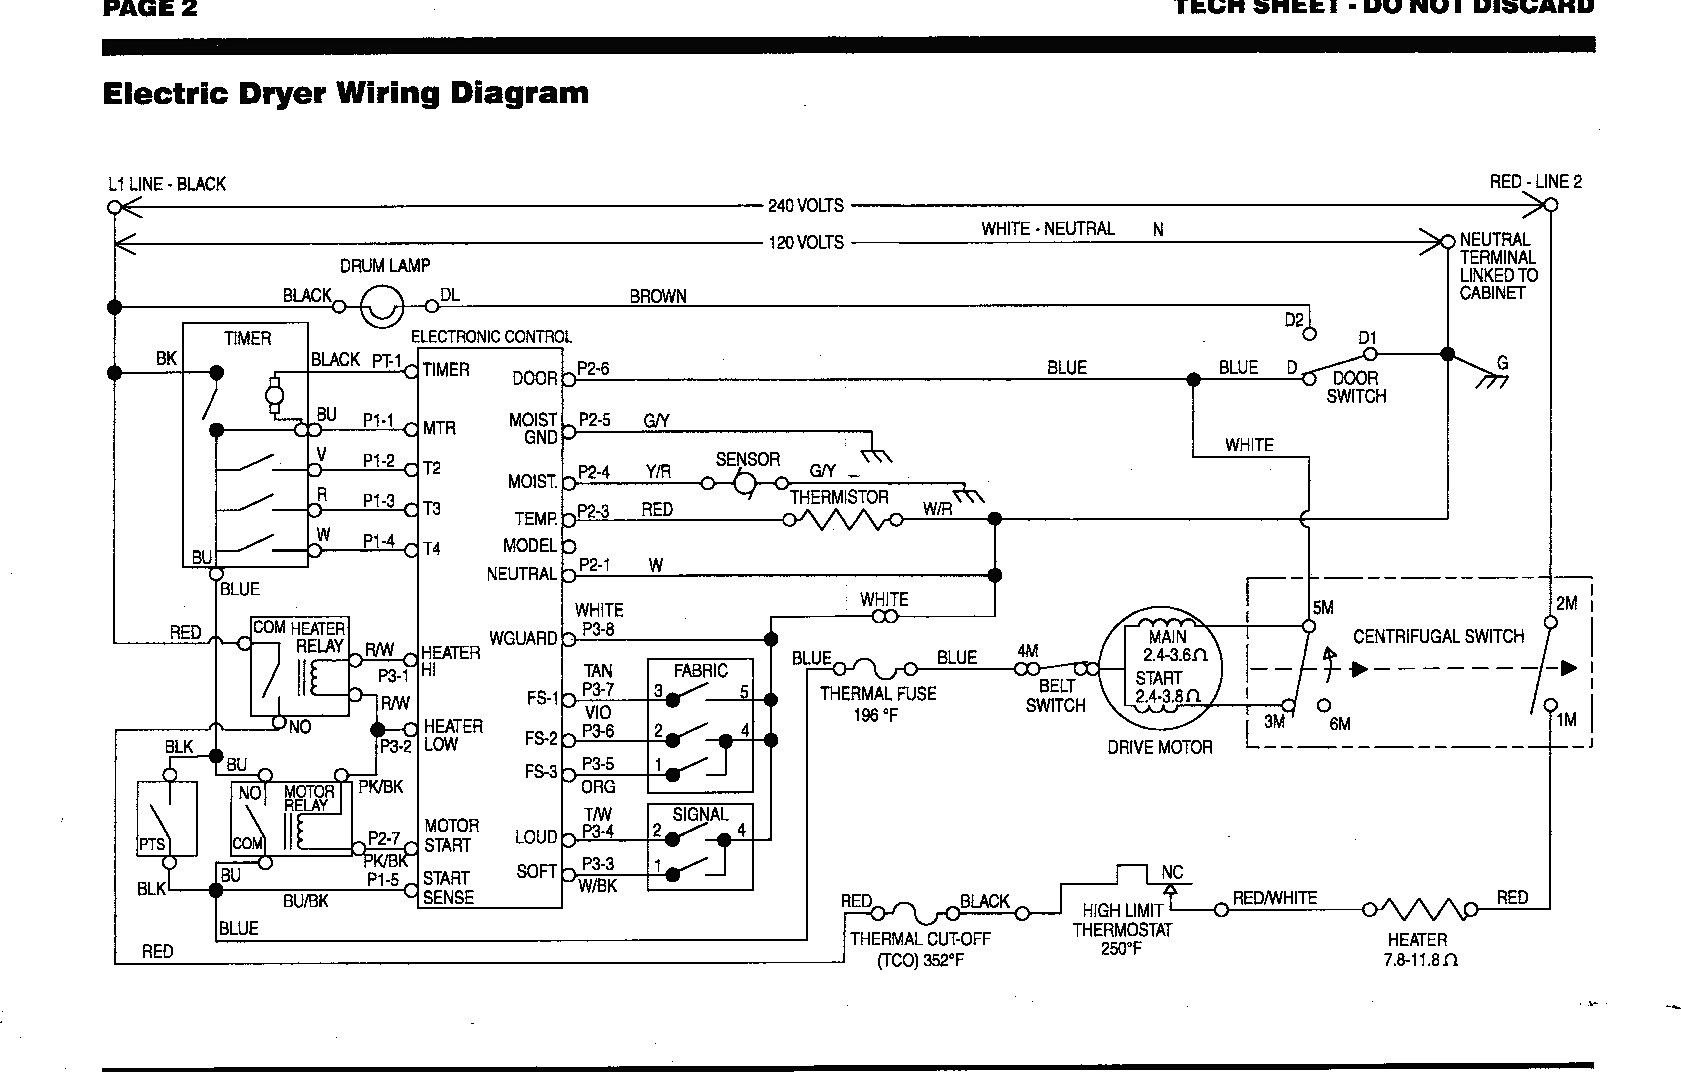 Whirlpool Dryer Wiring Diagram Preisvergleich Kenmore Dryer thermostat Wiring Diagram Image